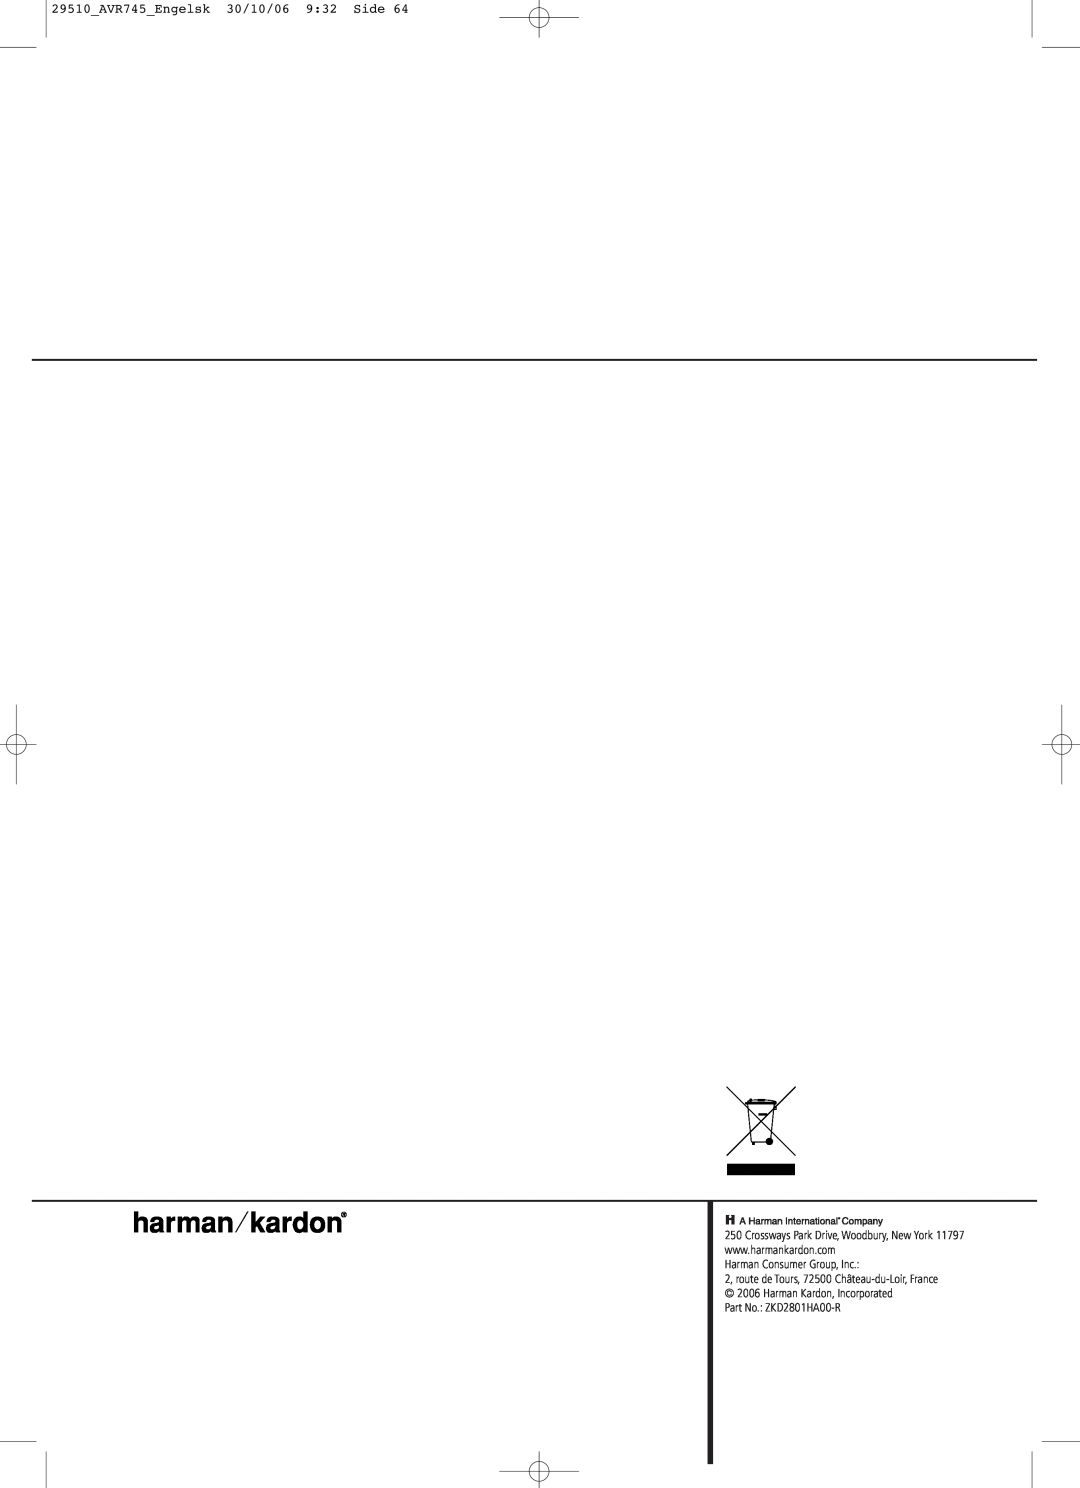 Harman-Kardon AVR 745 29510_AVR745_Engelsk 30/10/06 9:32 Side, Harman Consumer Group, Inc, Part No.: ZKD2801HA00-R 